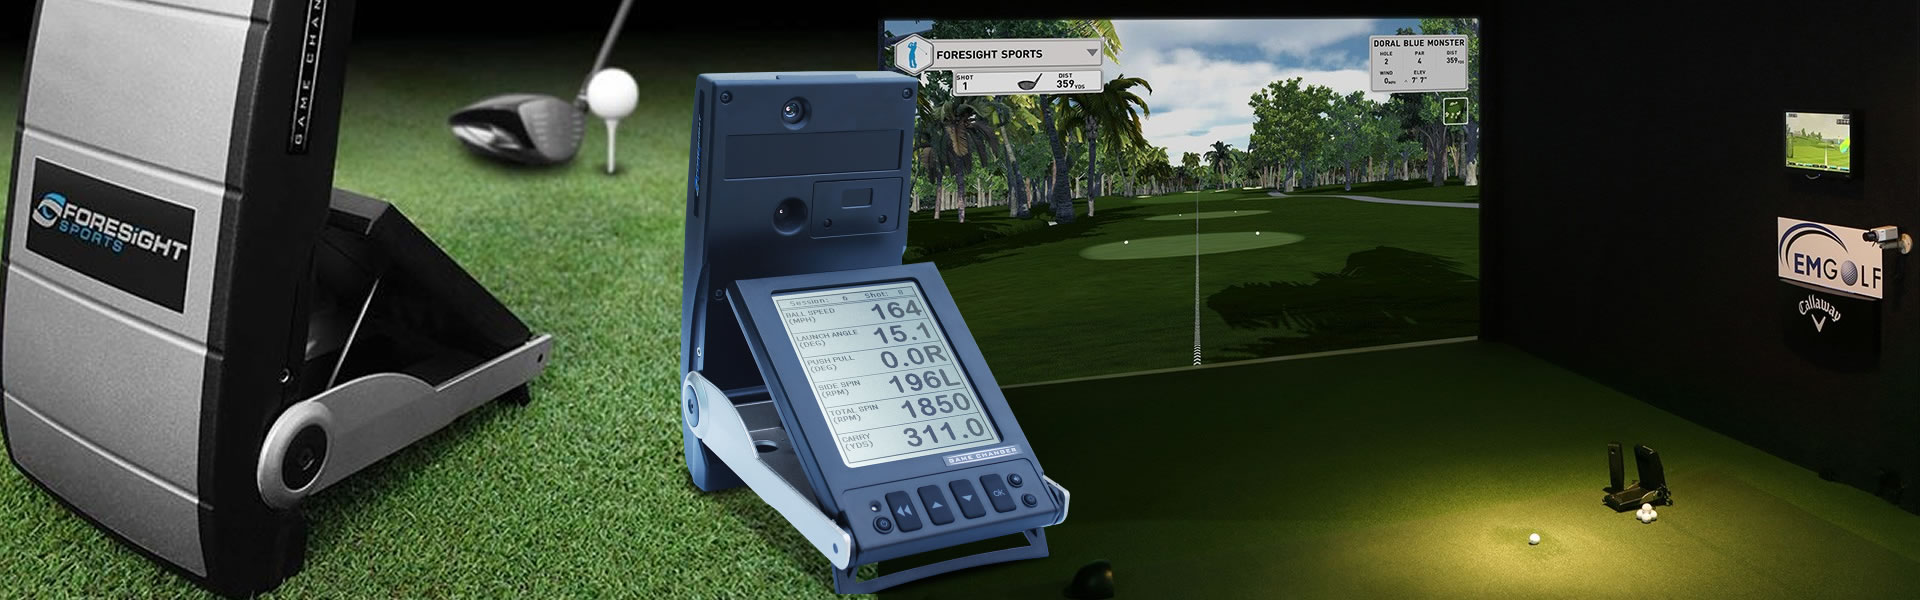 Golf-Simulator-Launch-Monitor-Stunde-Golfpro-Zuerich-Thierry-Rombaldi-02